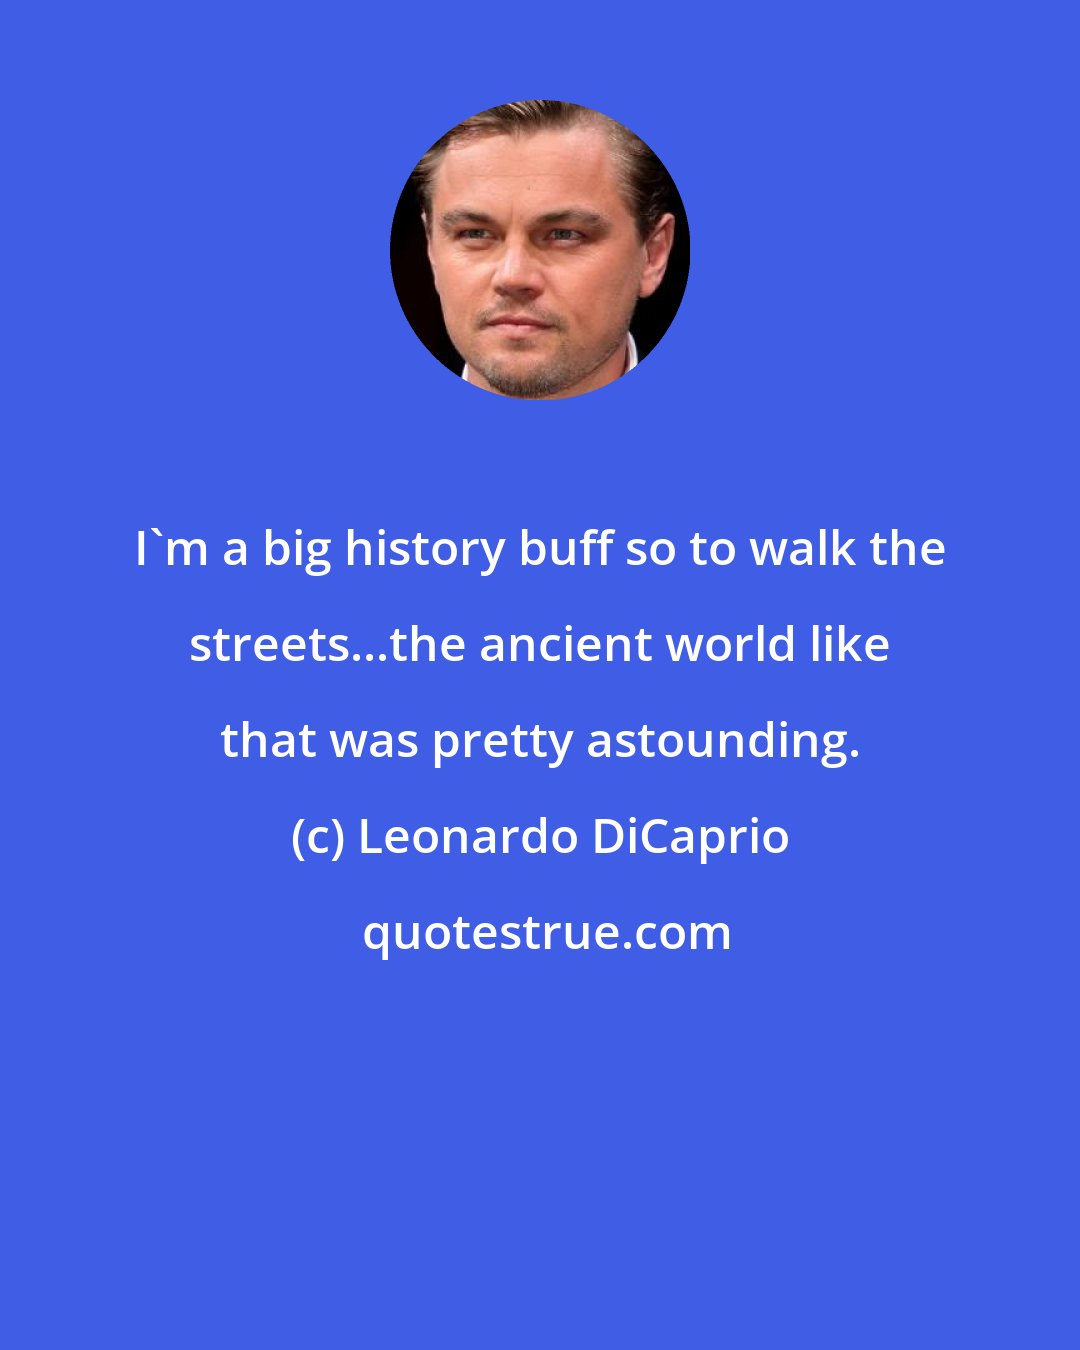 Leonardo DiCaprio: I'm a big history buff so to walk the streets...the ancient world like that was pretty astounding.